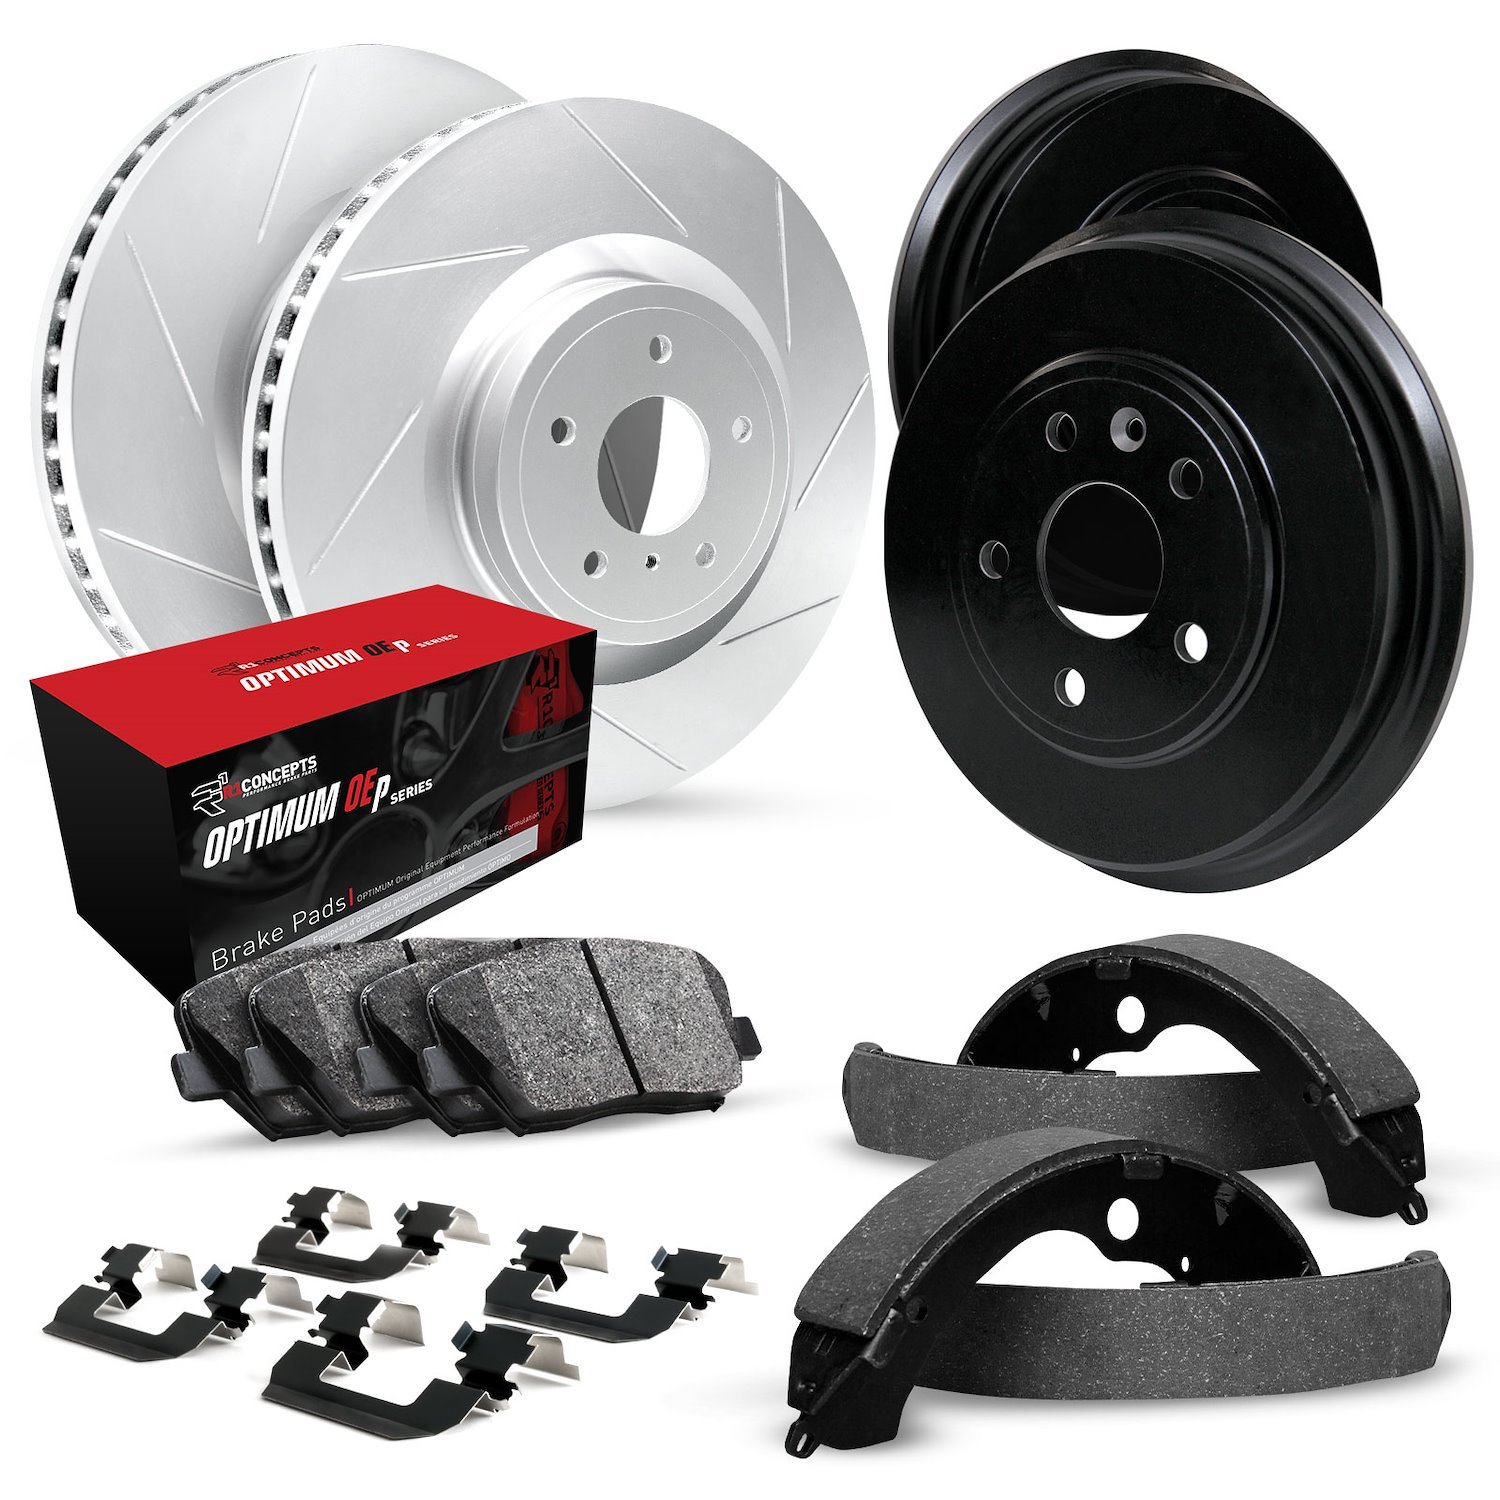 GEO-Carbon Slotted Brake Rotor & Drum Set w/Optimum OE Pads, Shoes, & Hardware, 2009-2011 Infiniti/Nissan